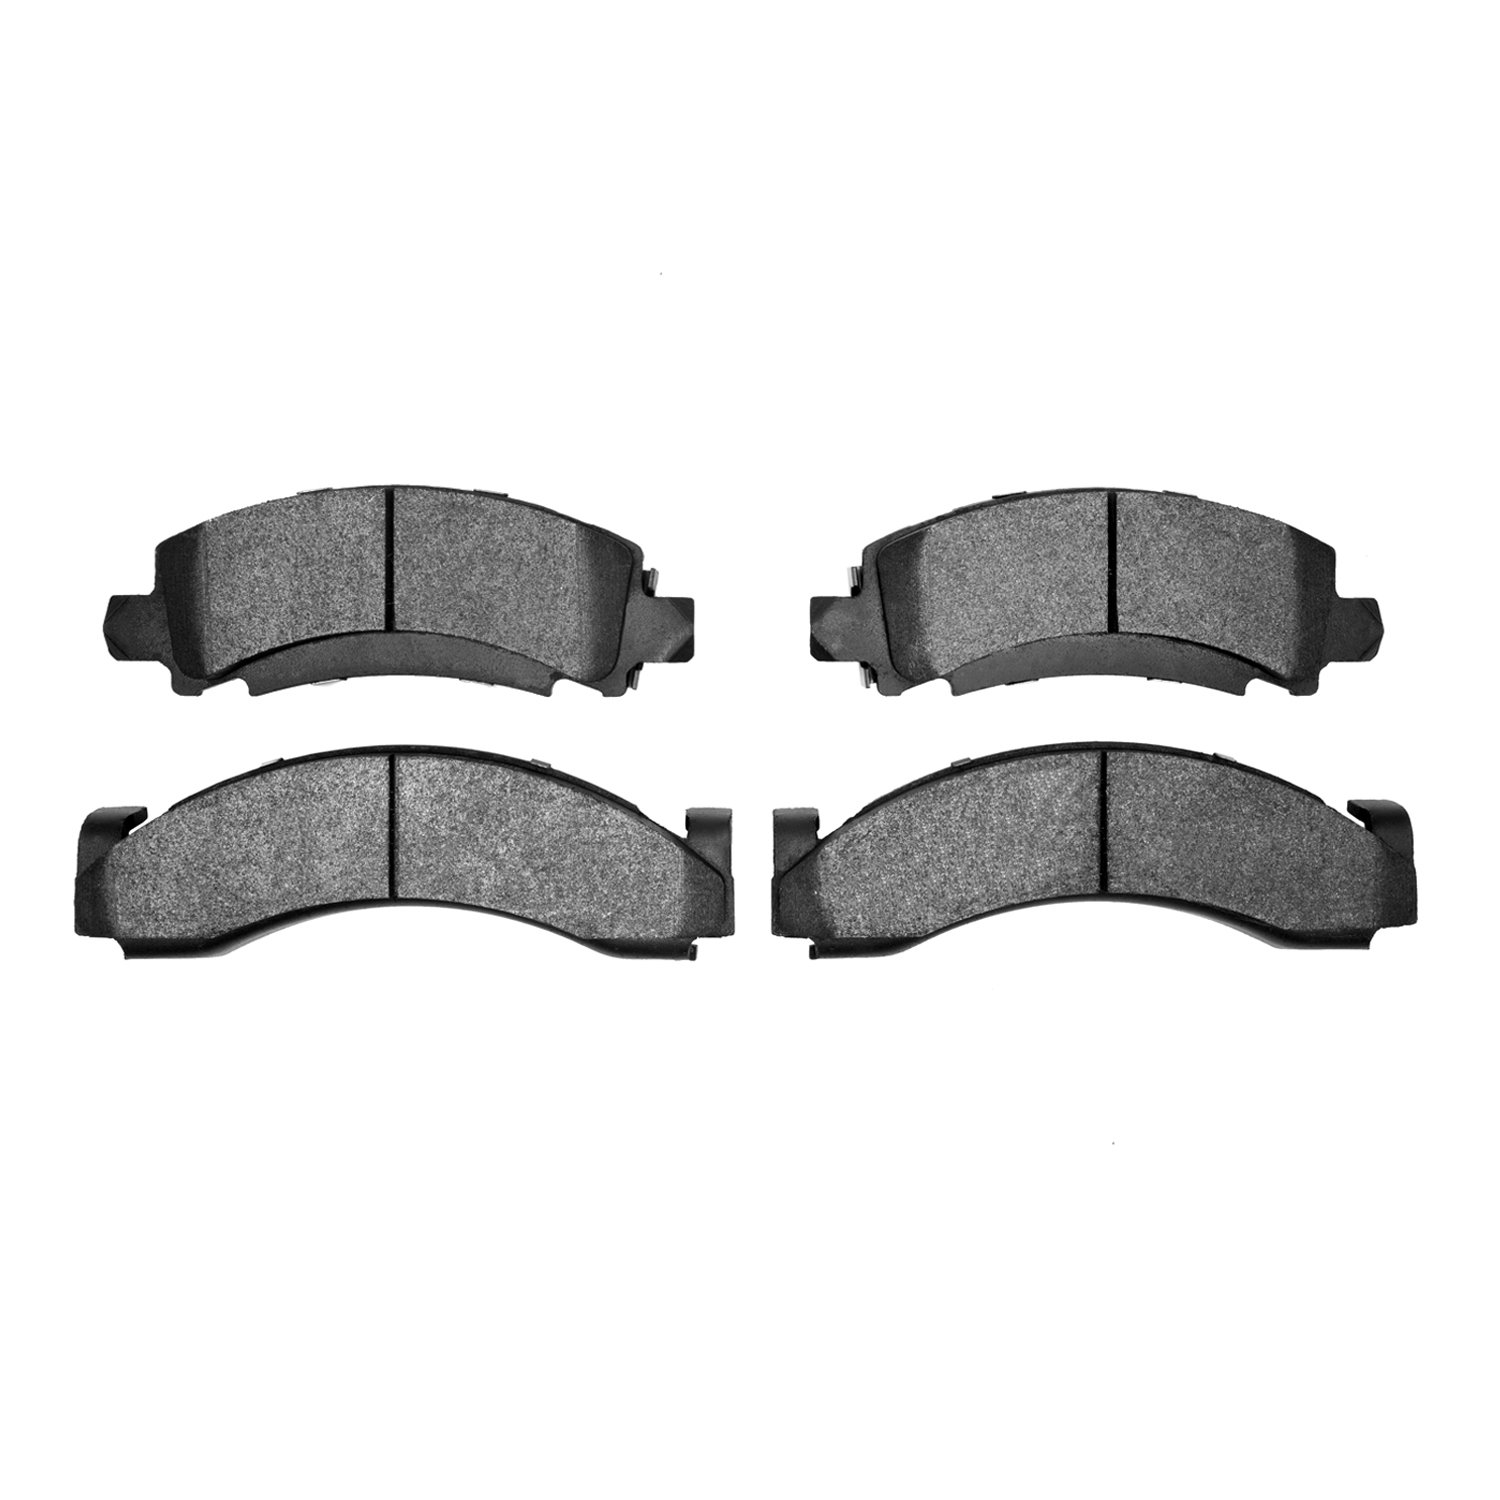 1214-0543-00 Heavy-Duty Semi-Metallic Brake Pads, 1971-2006 Multiple Makes/Models, Position: Fr,Front,Rear,Rr